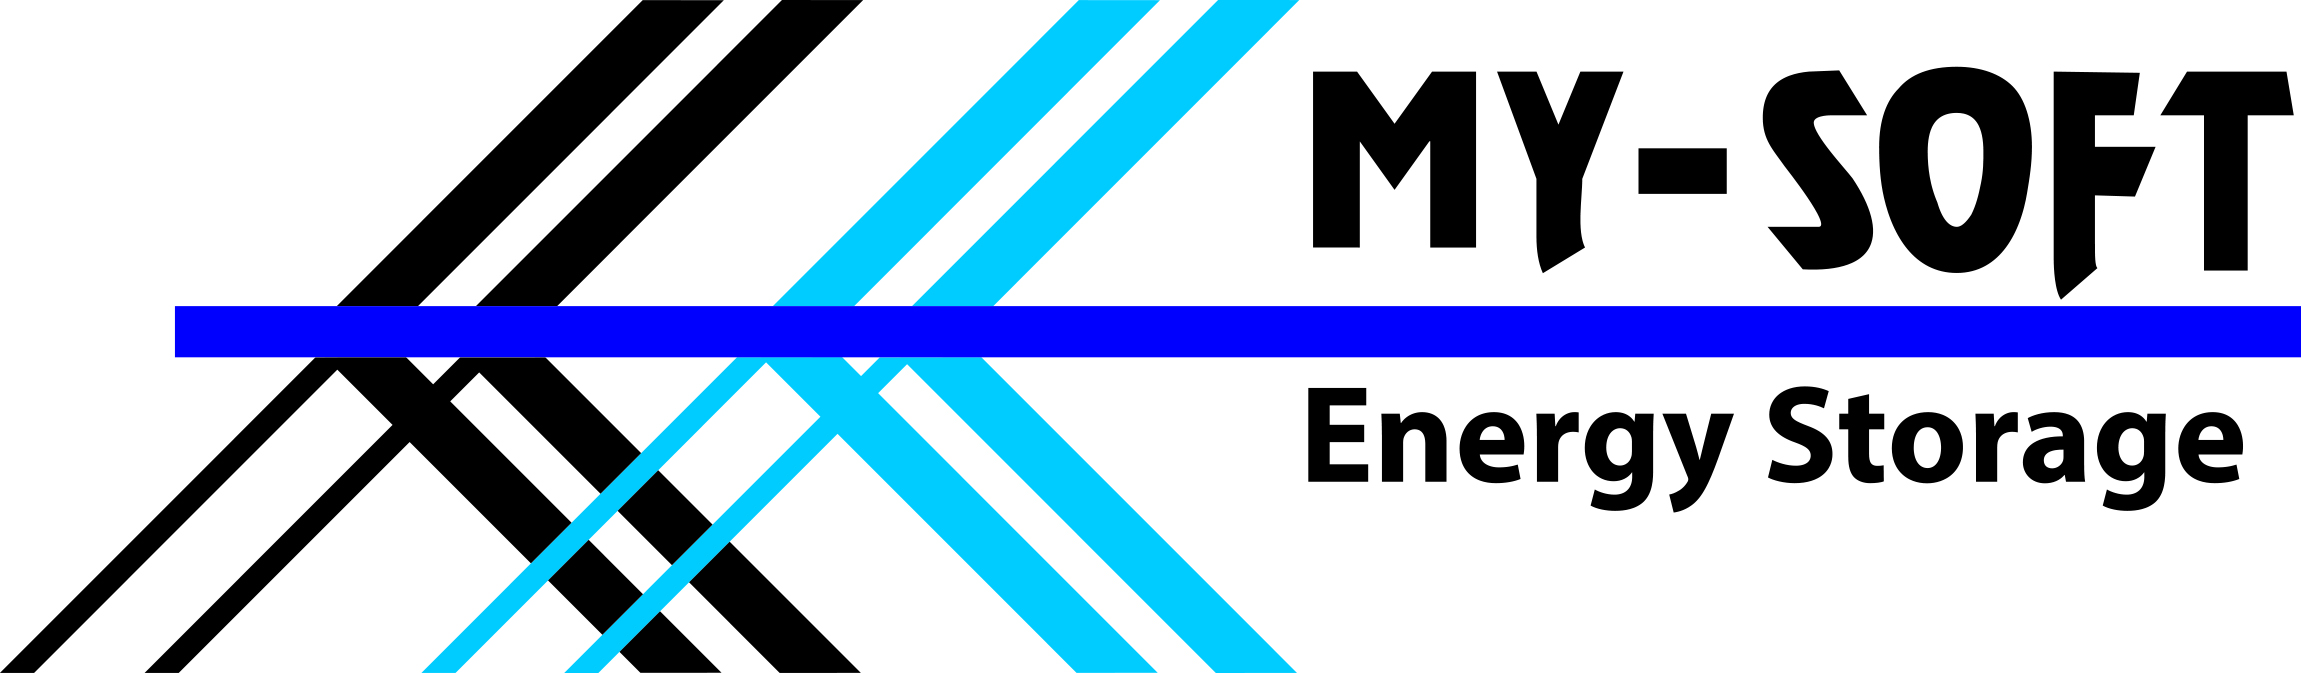 mysoft_logo_energy